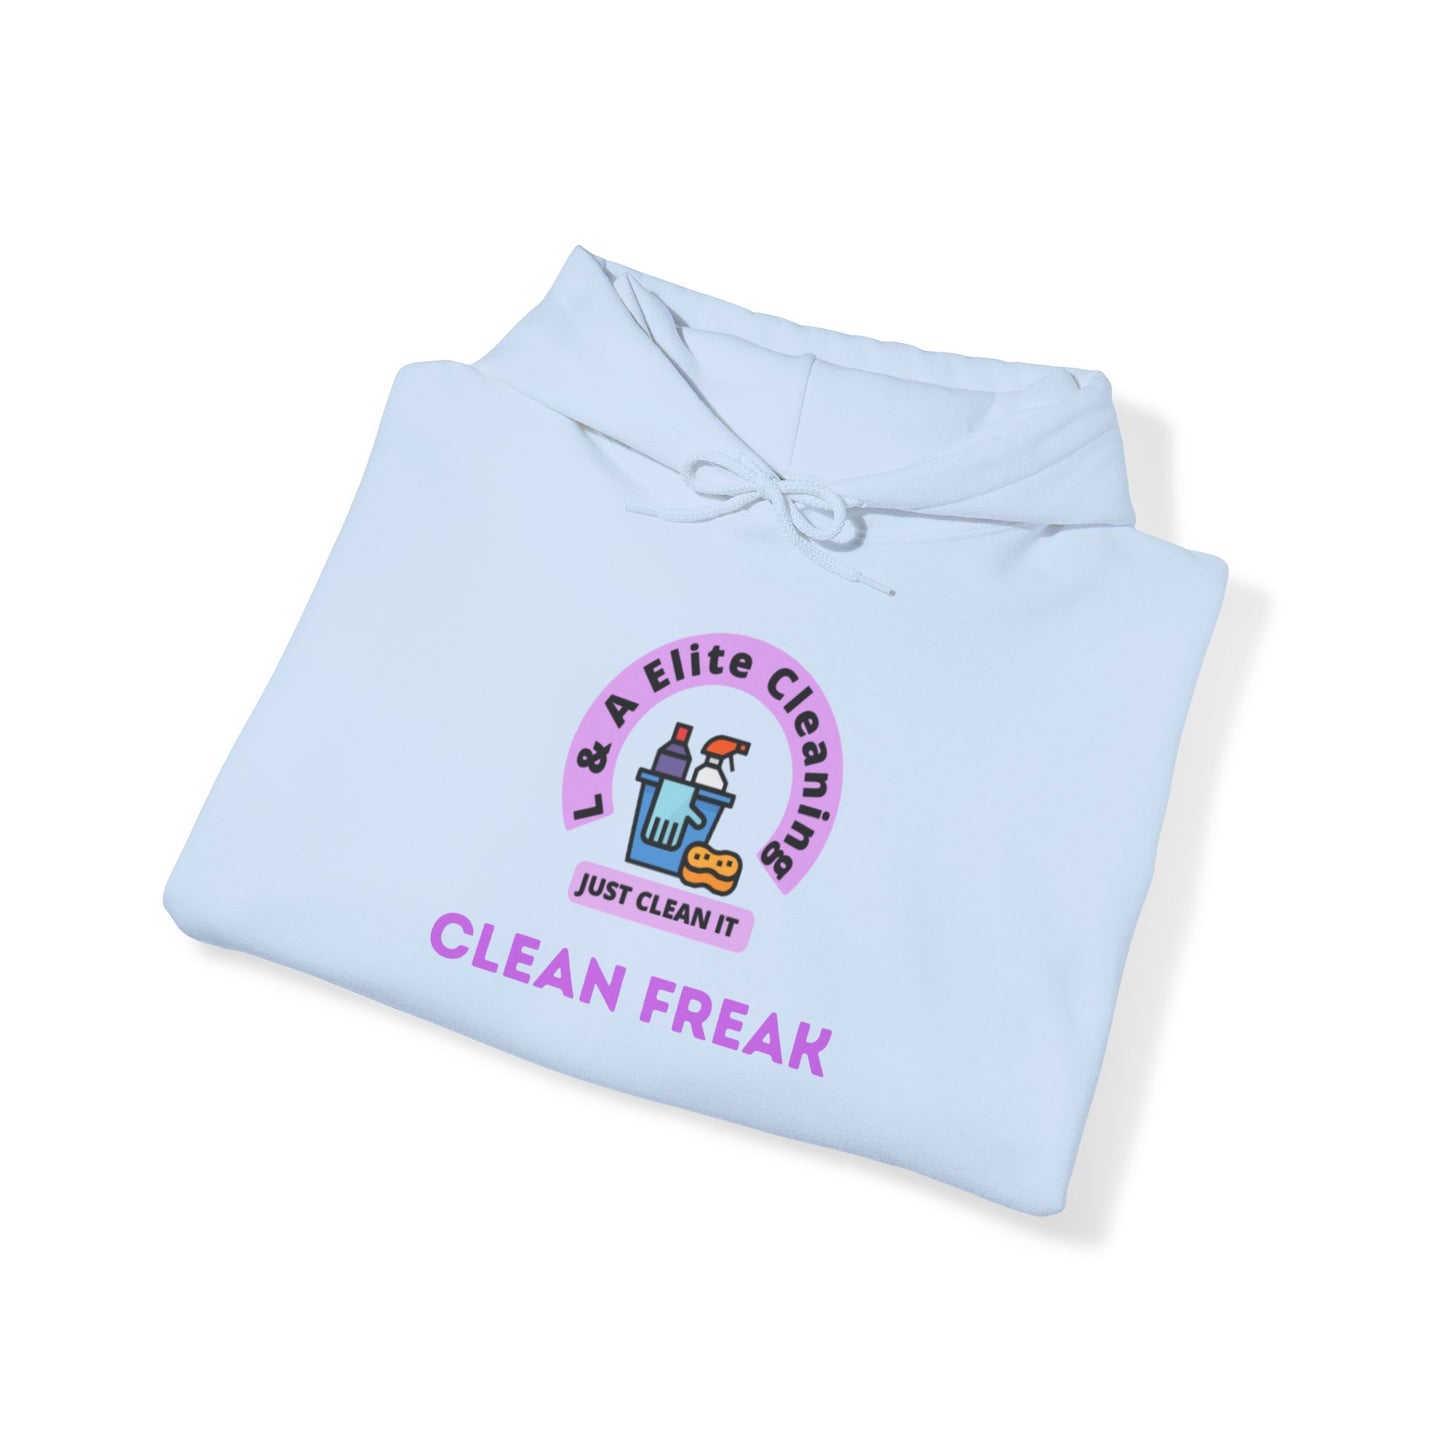 Clean Freak Sweatshirt